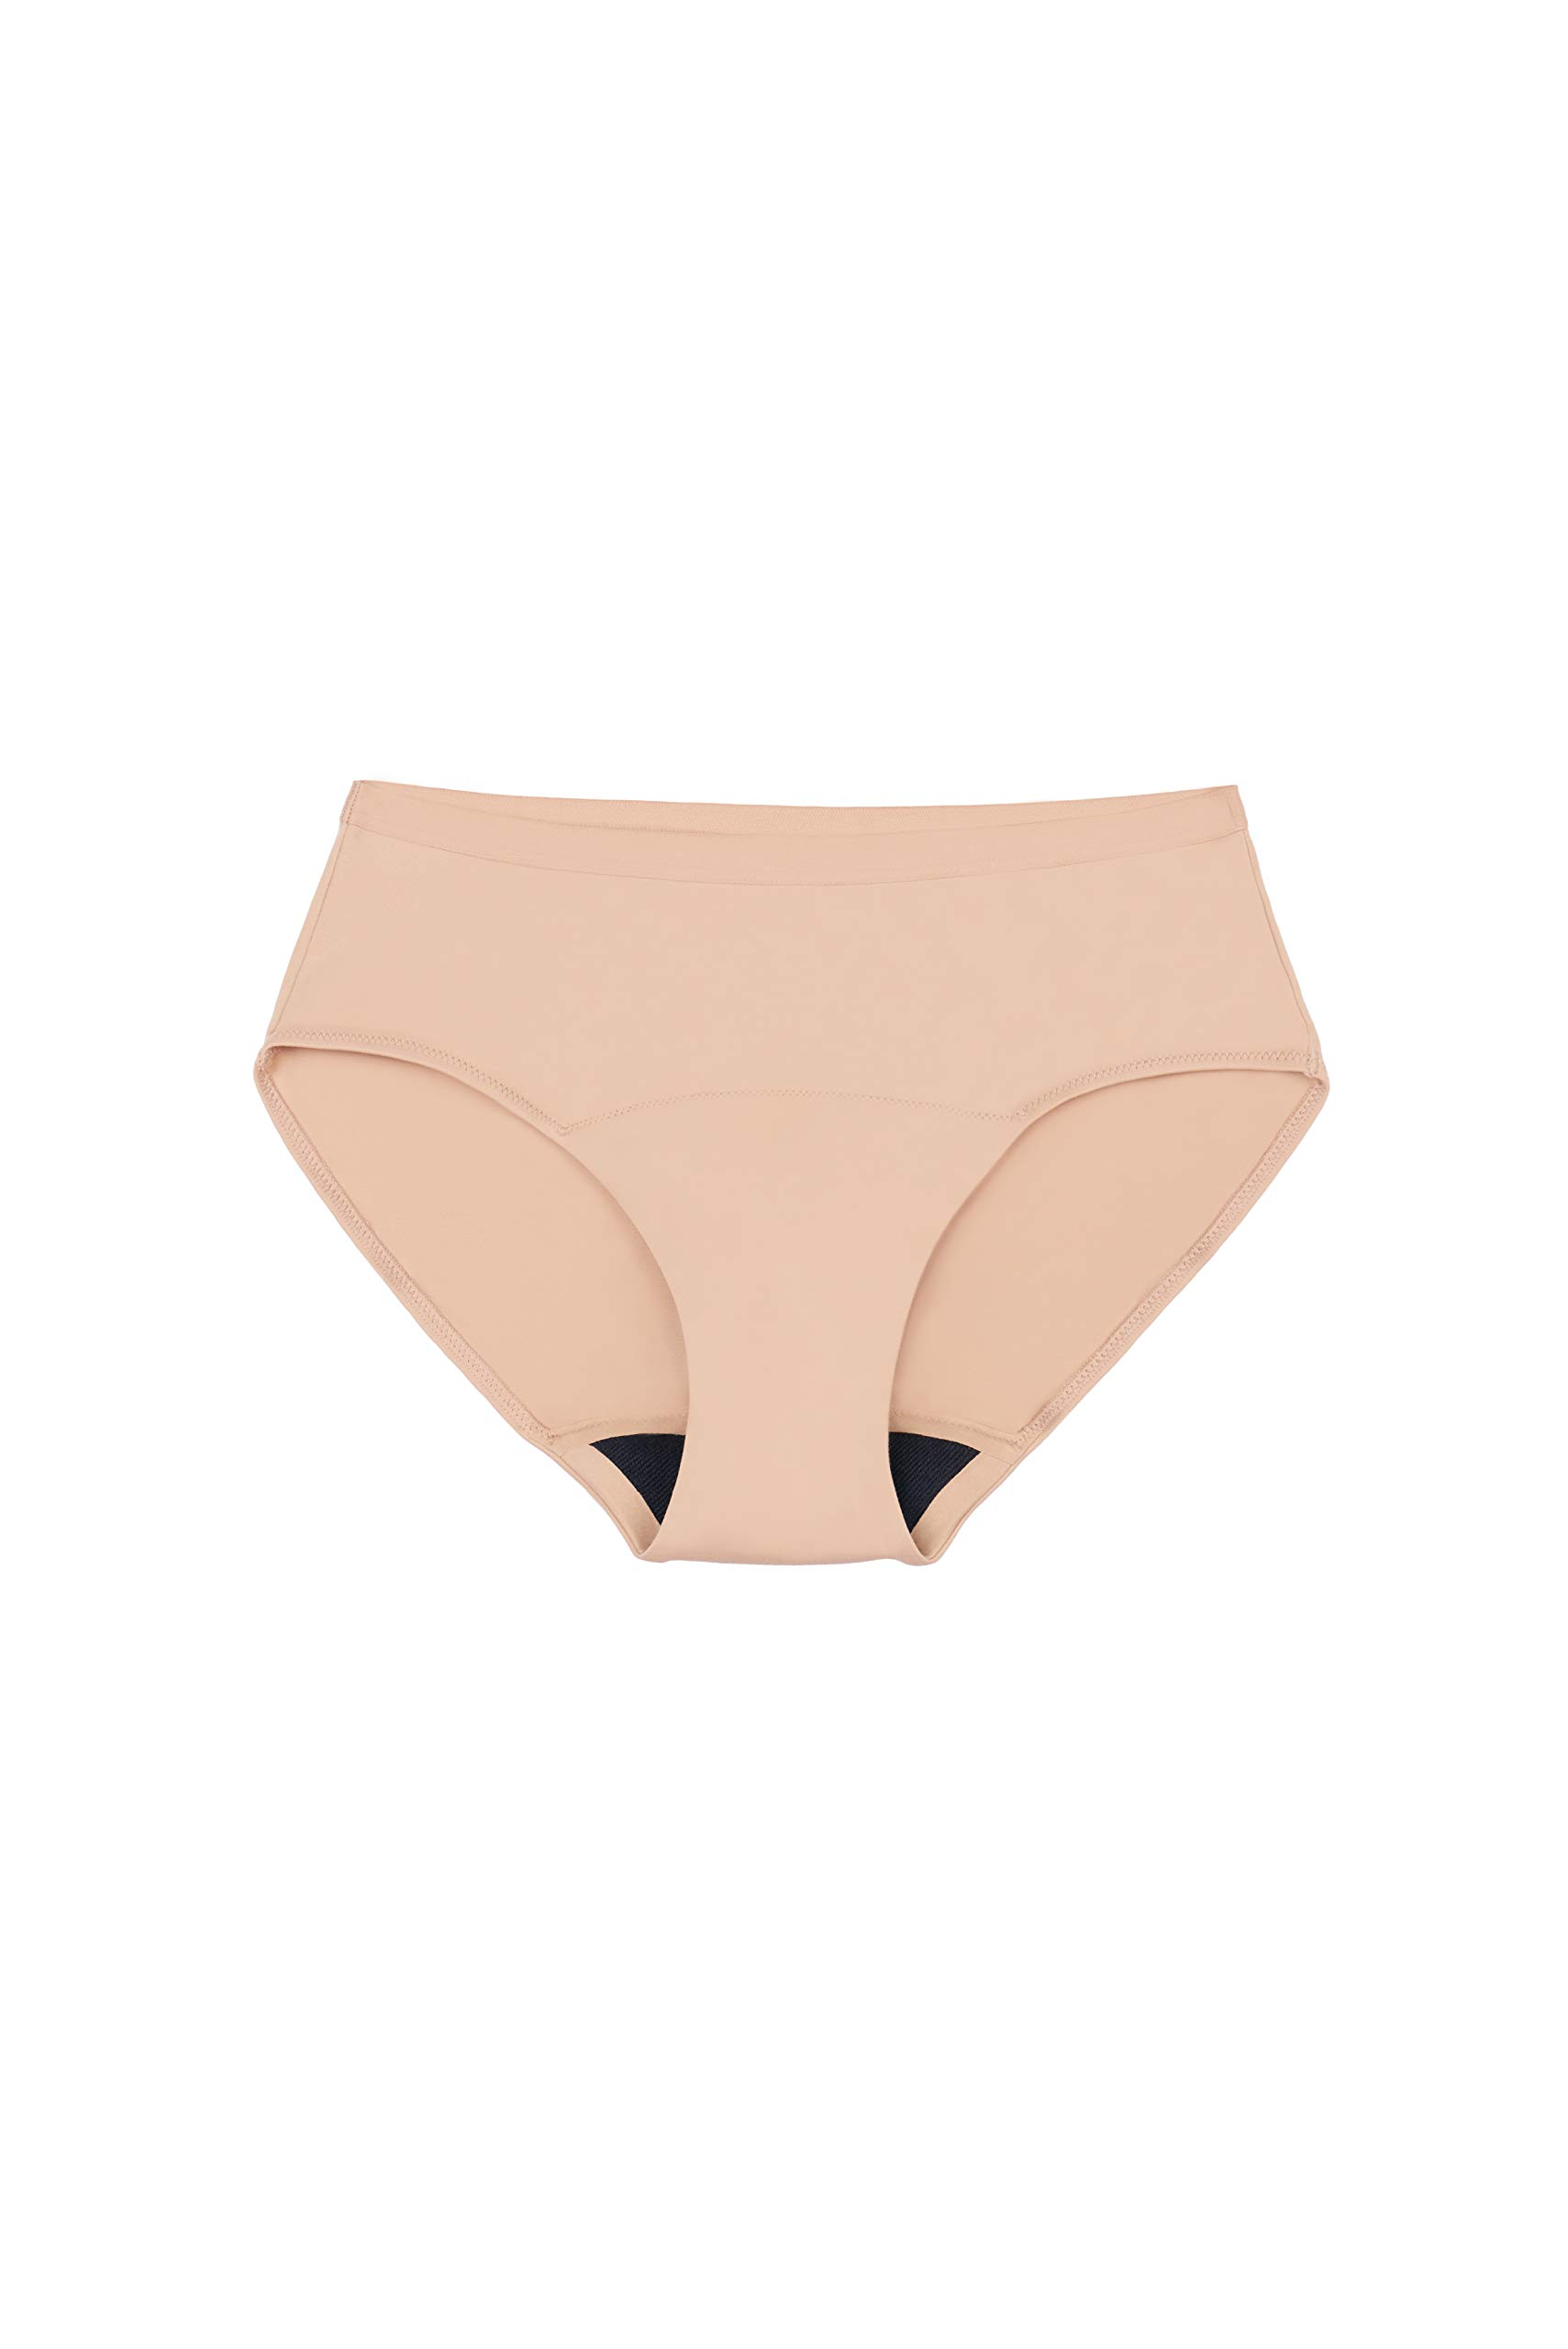 HELLOVE Womens Mesh Period Panties Menstrual Leak Proof Underwear  Incontinence Protective Briefs